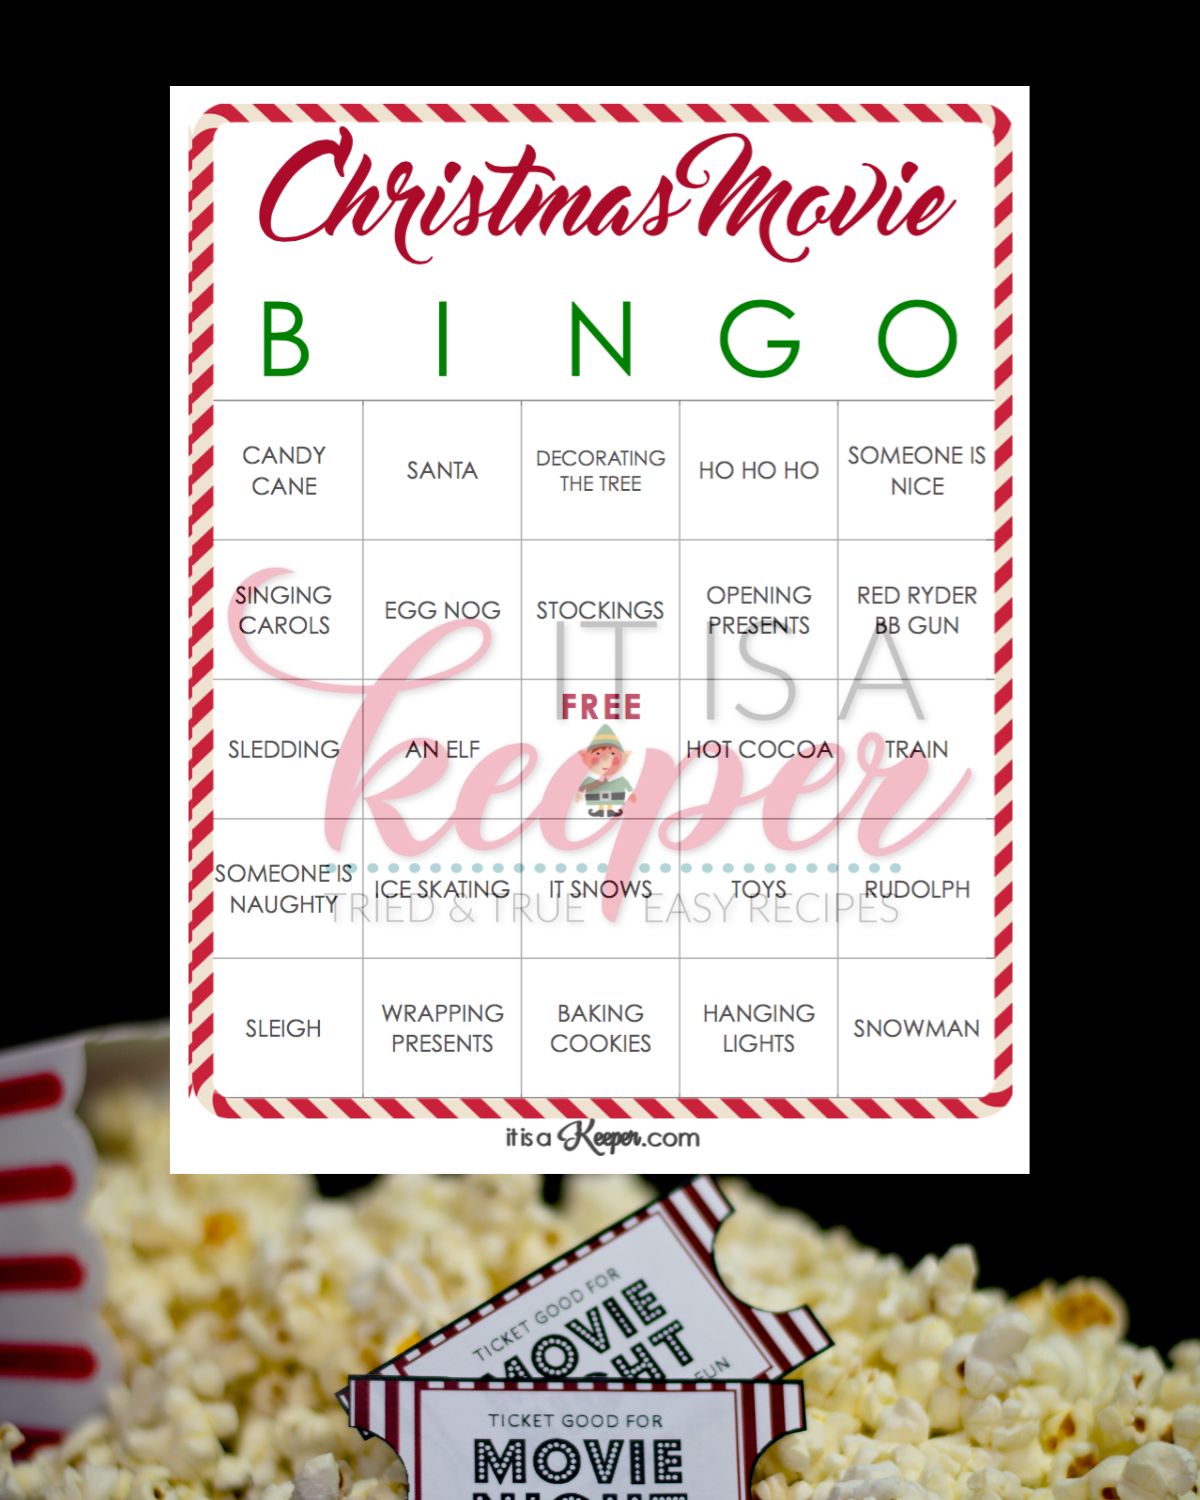 christmas movie bingo card with popcorn and movie tickets.